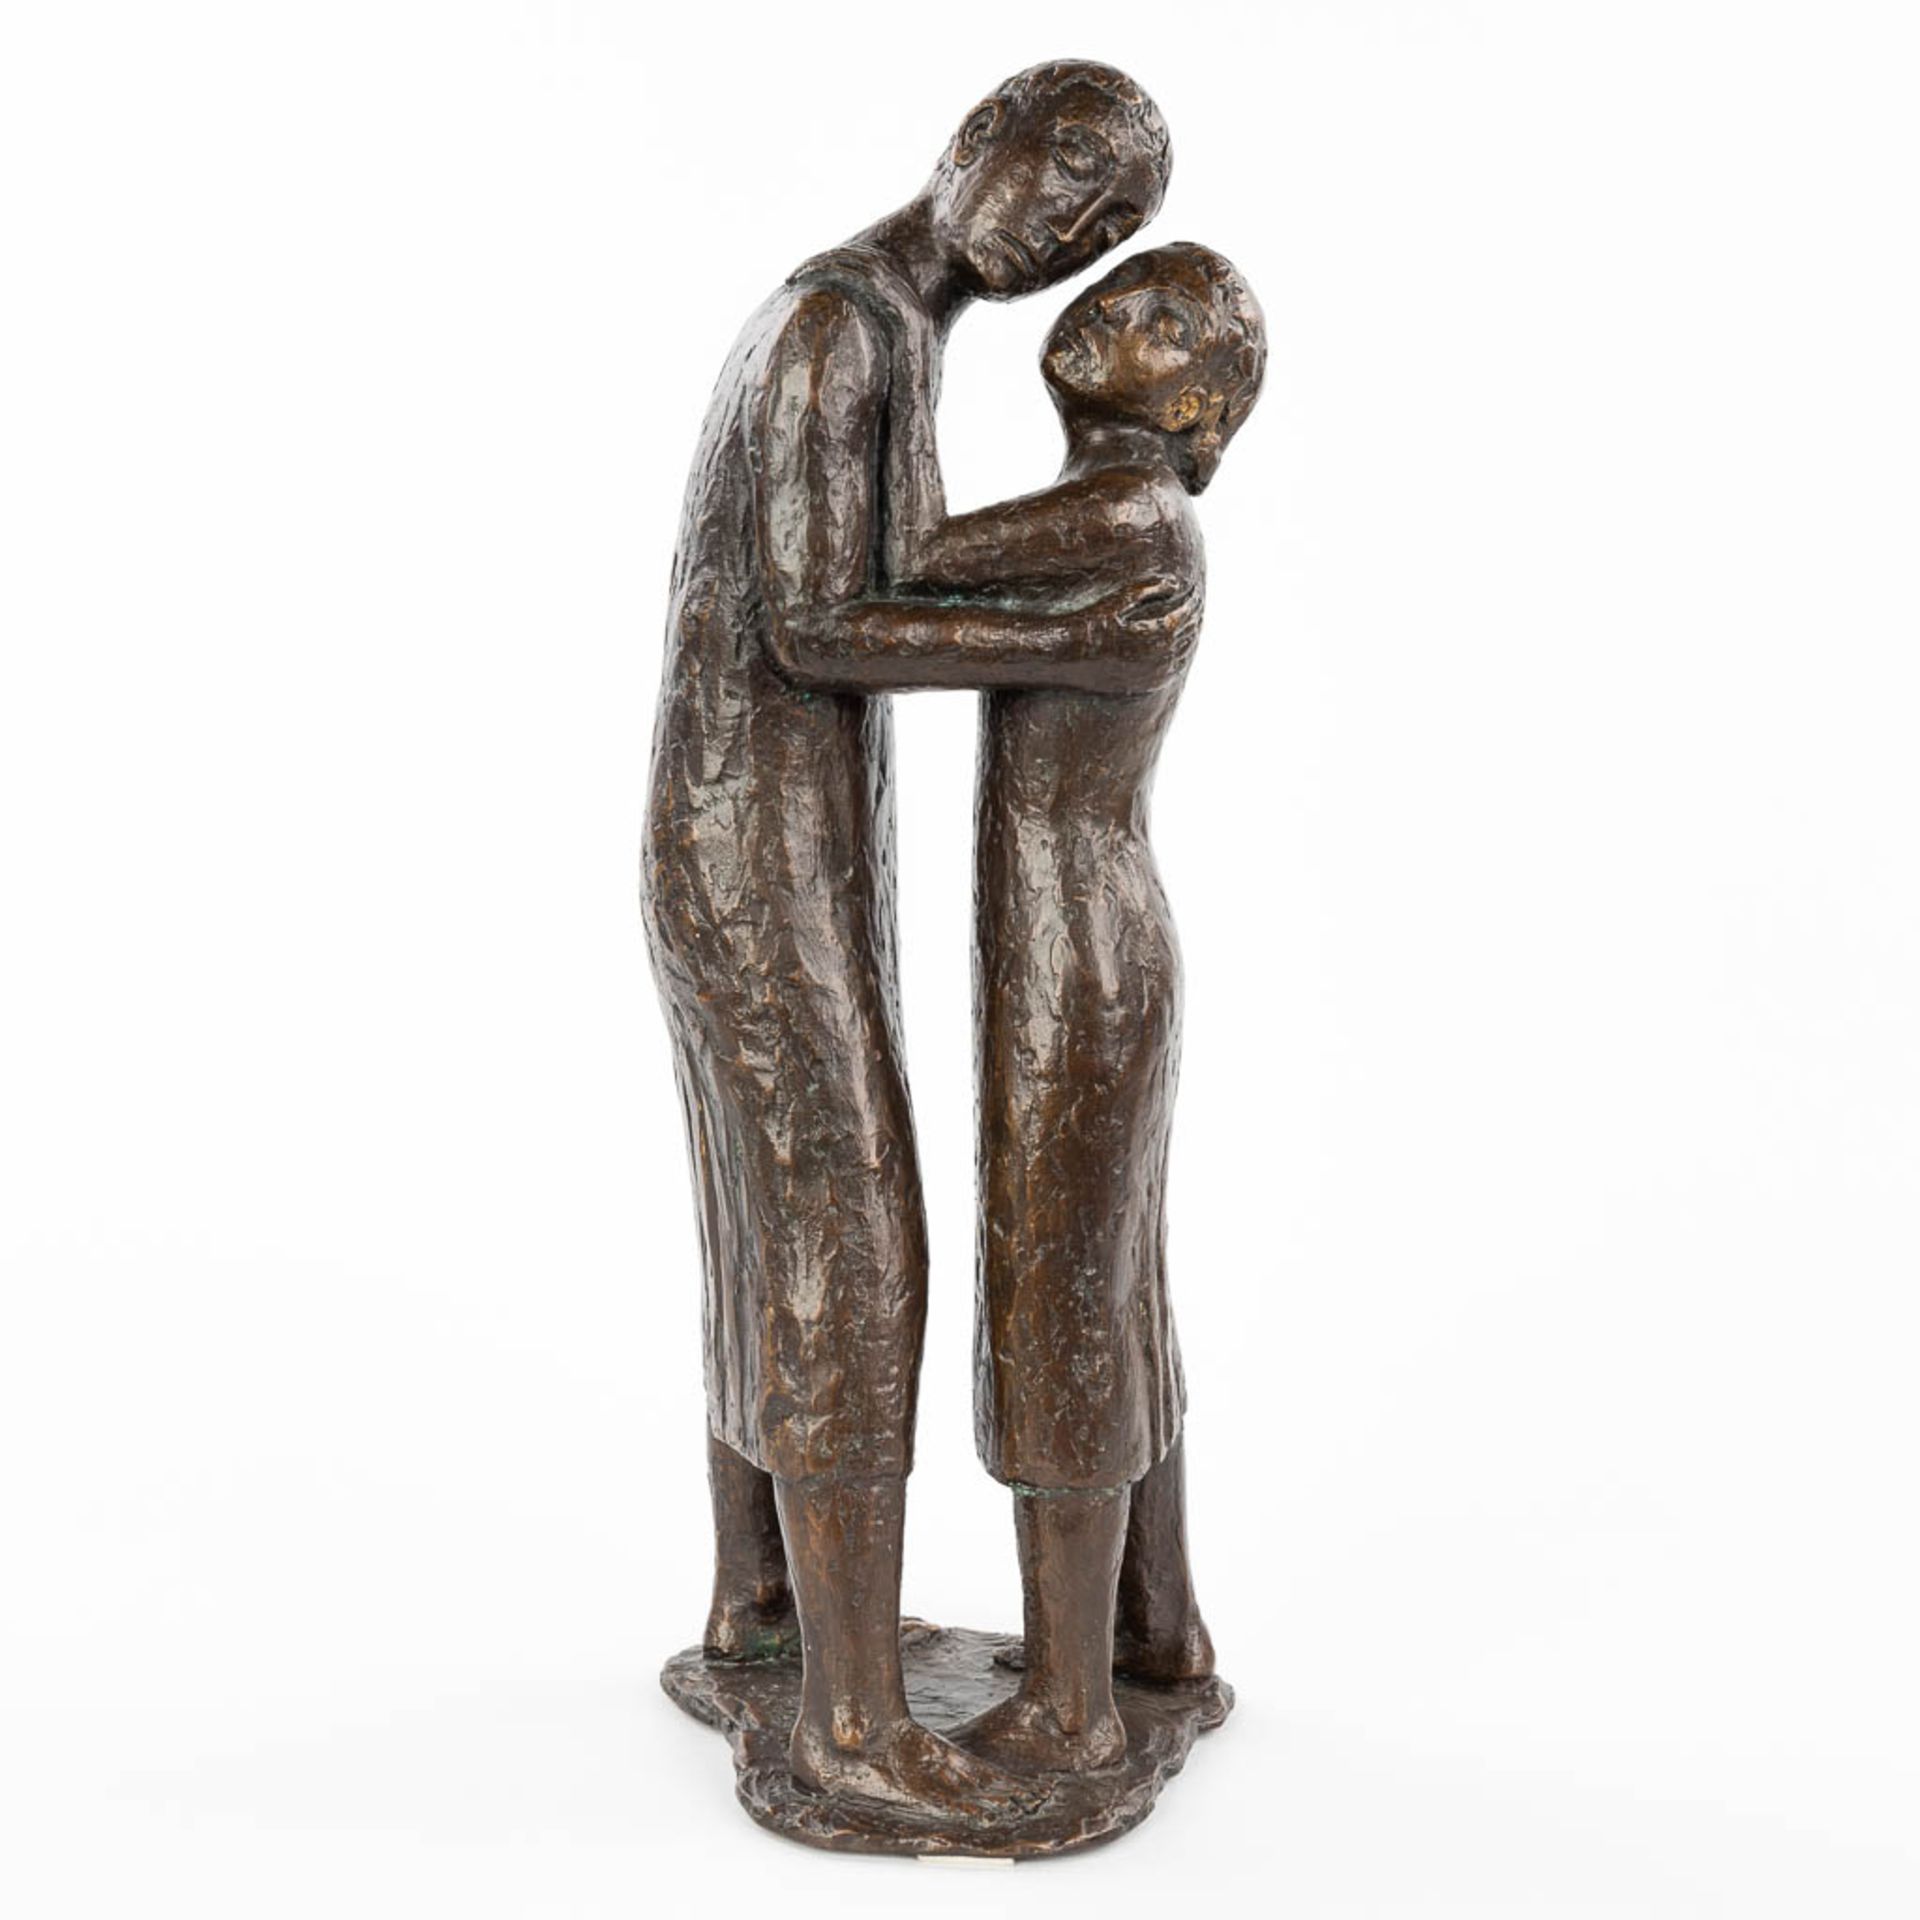 Richard KESSLER (1916) 'Der Abschied' ' Goodbye', patinated bronze. (H:41cm) - Image 4 of 11